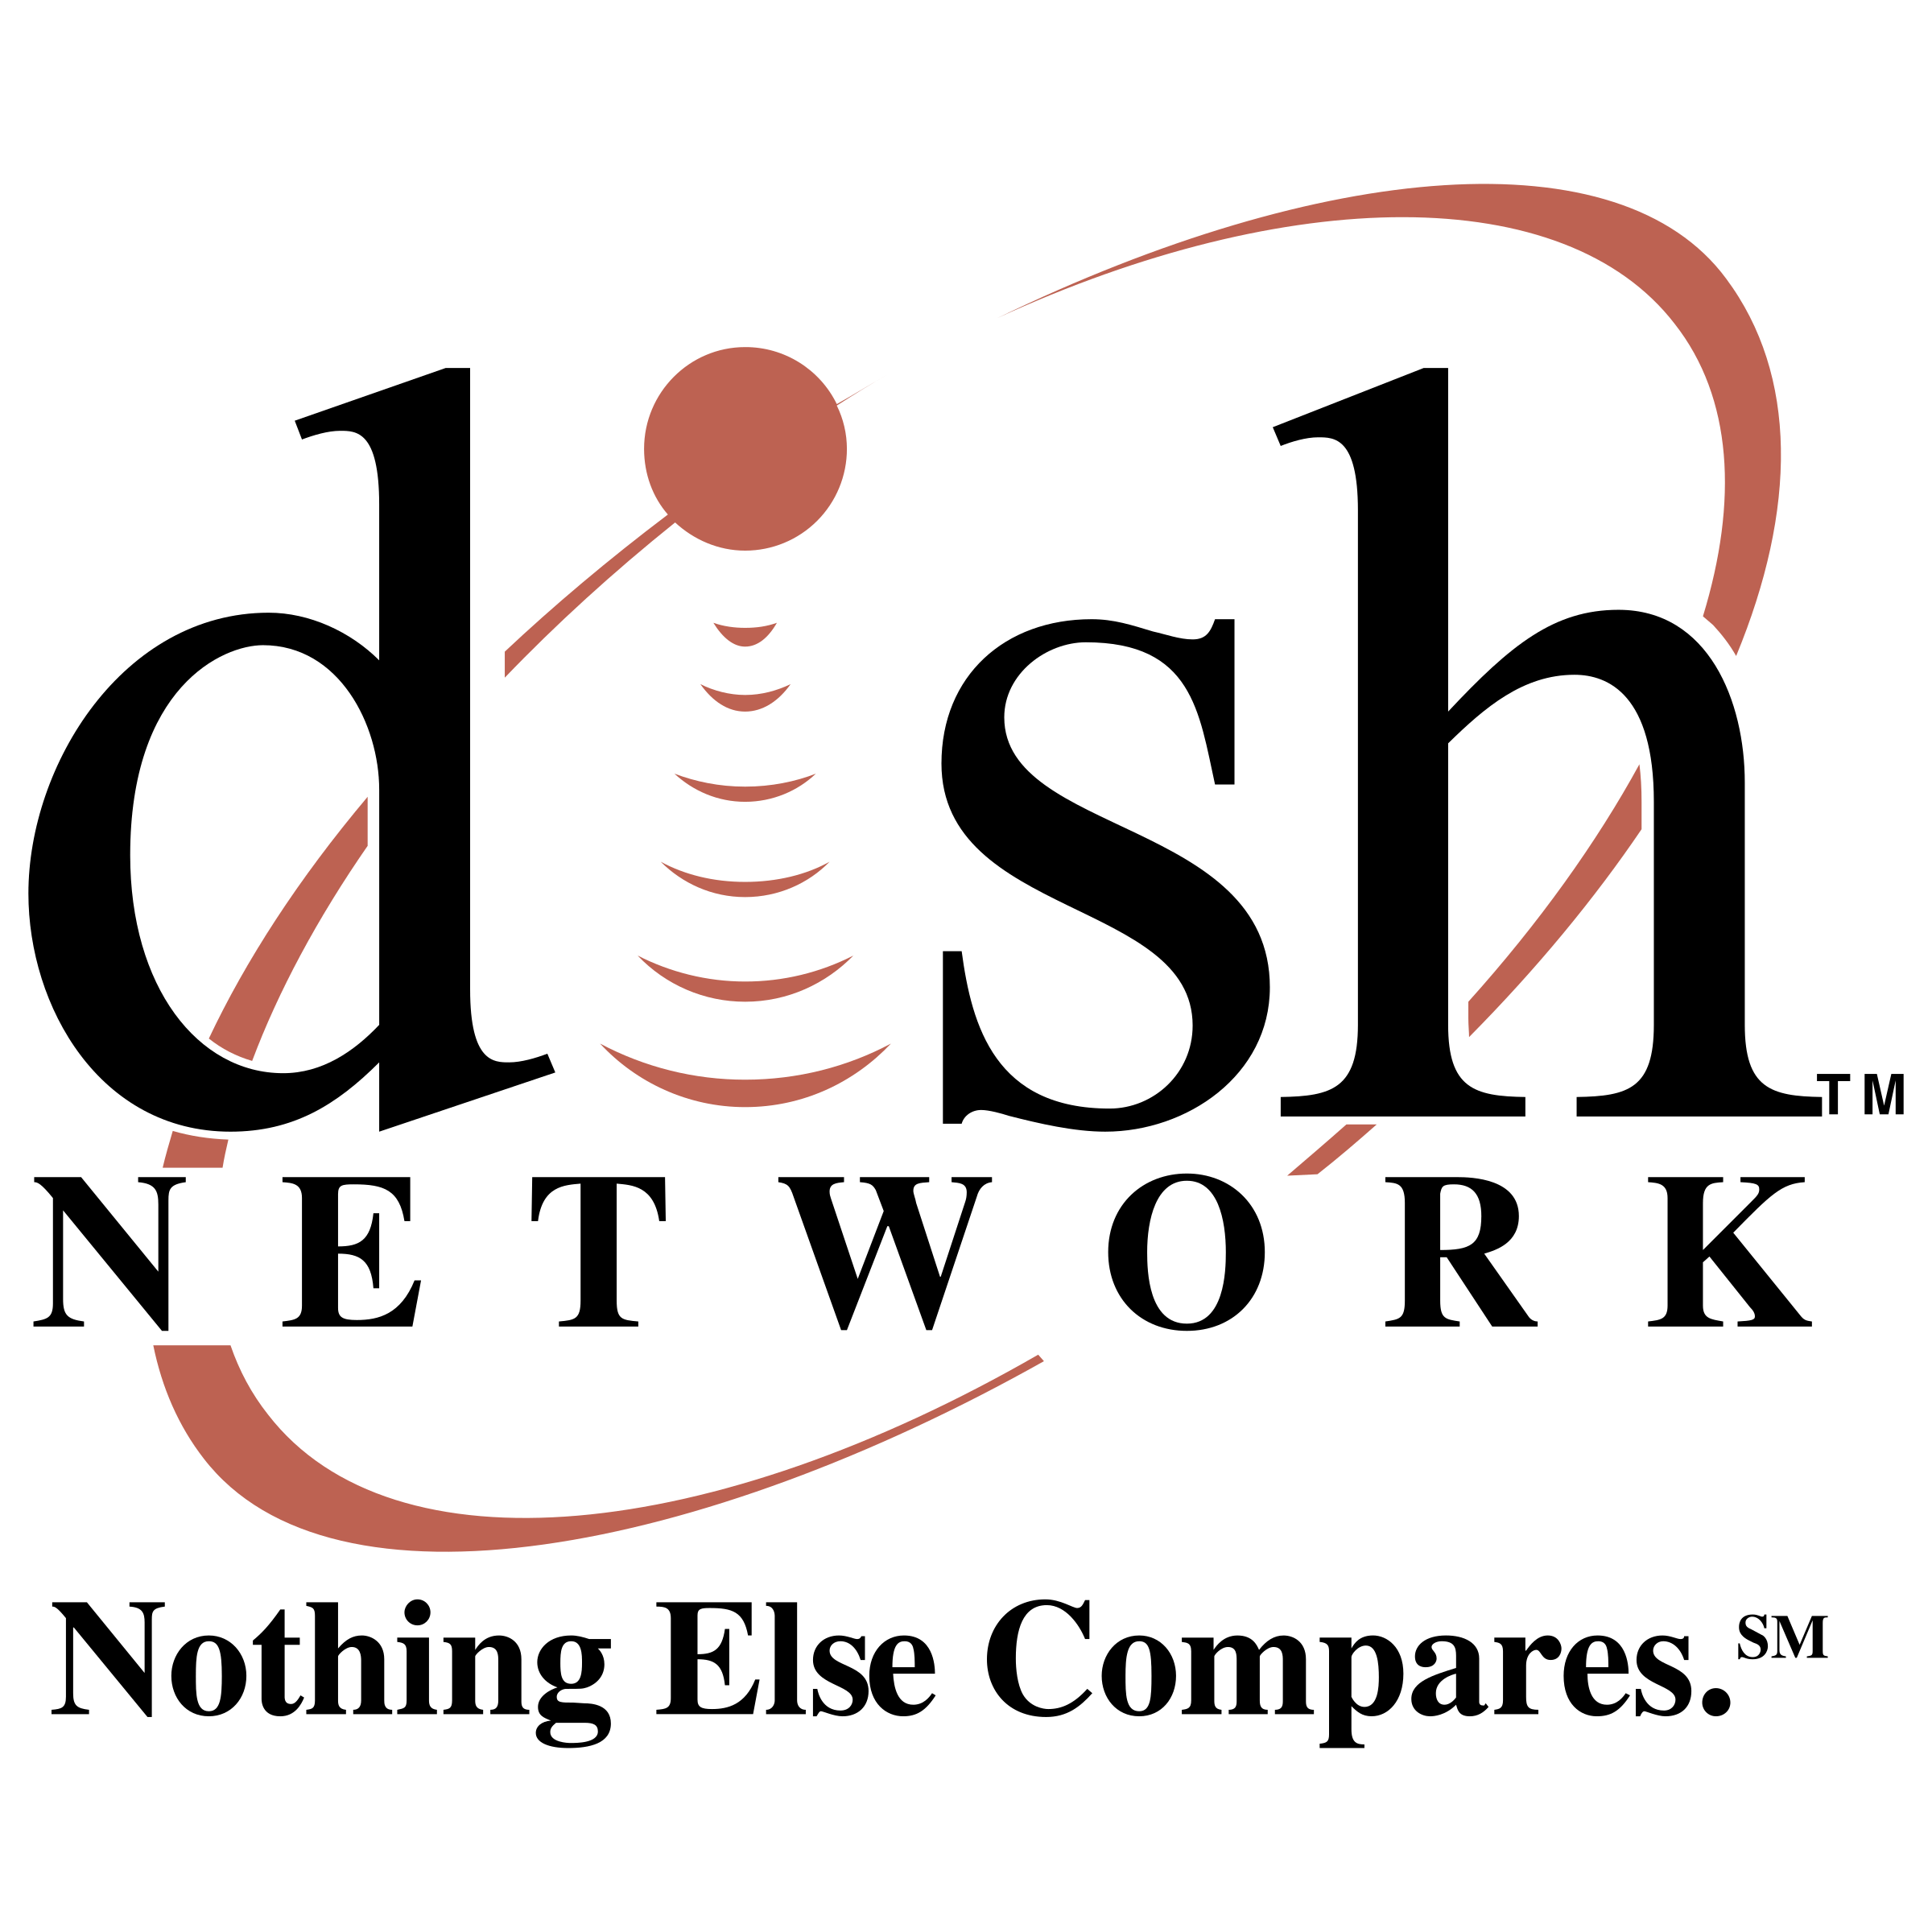 Dish Network Logo - Dish Network Logo PNG Transparent & SVG Vector - Freebie Supply